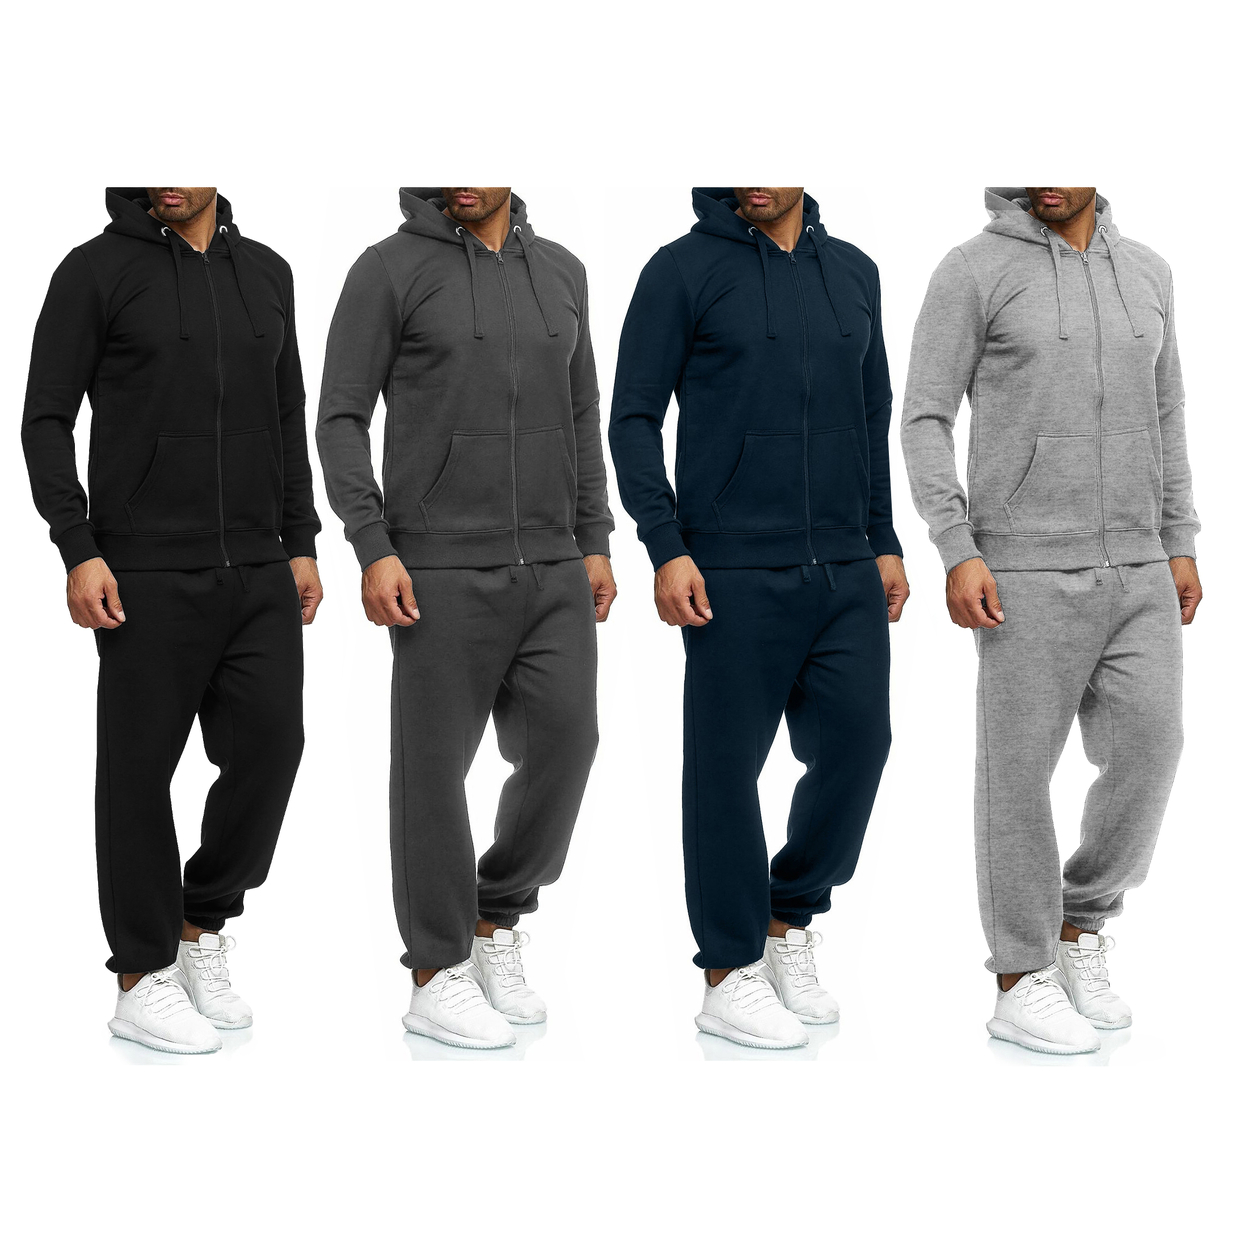 2/4-Piece: Men's Winter Warm Cozy Athletic Multi-Pockets BIG & TALL Sweatsuit Set - Navy, 1, Medium